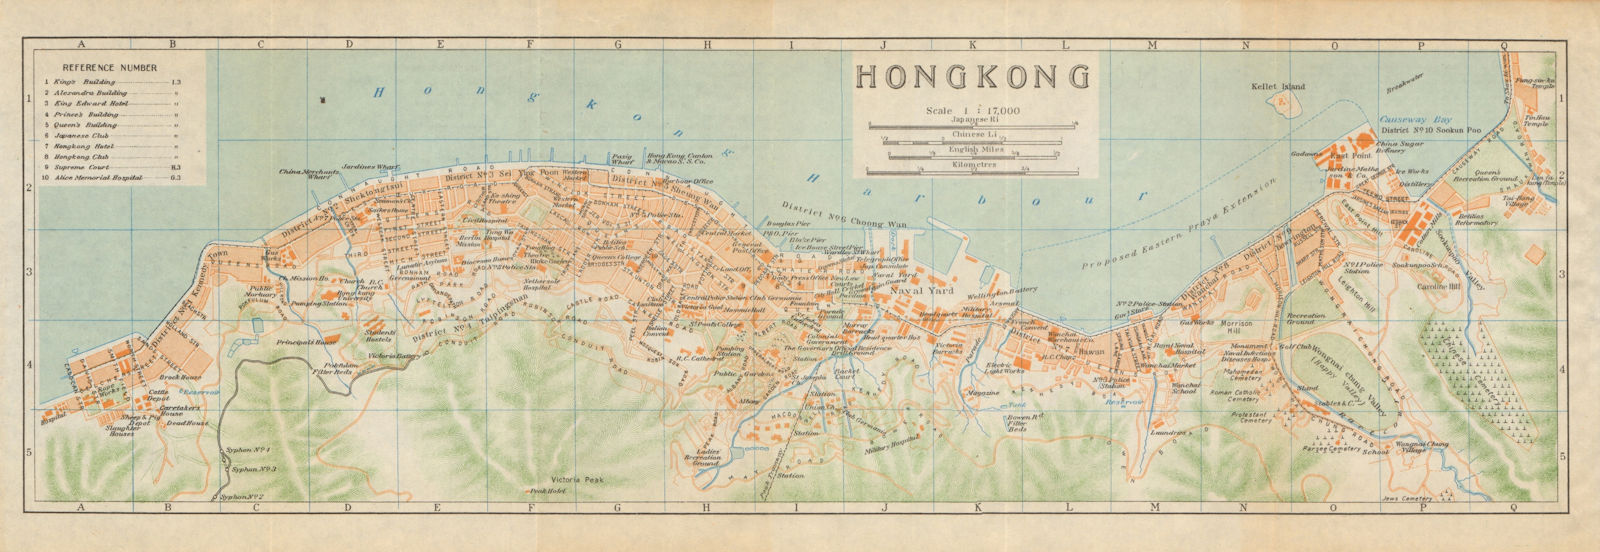 Associate Product 'Hongkong'. Victoria, Hong Kong island antique town city plan. China 1924 map